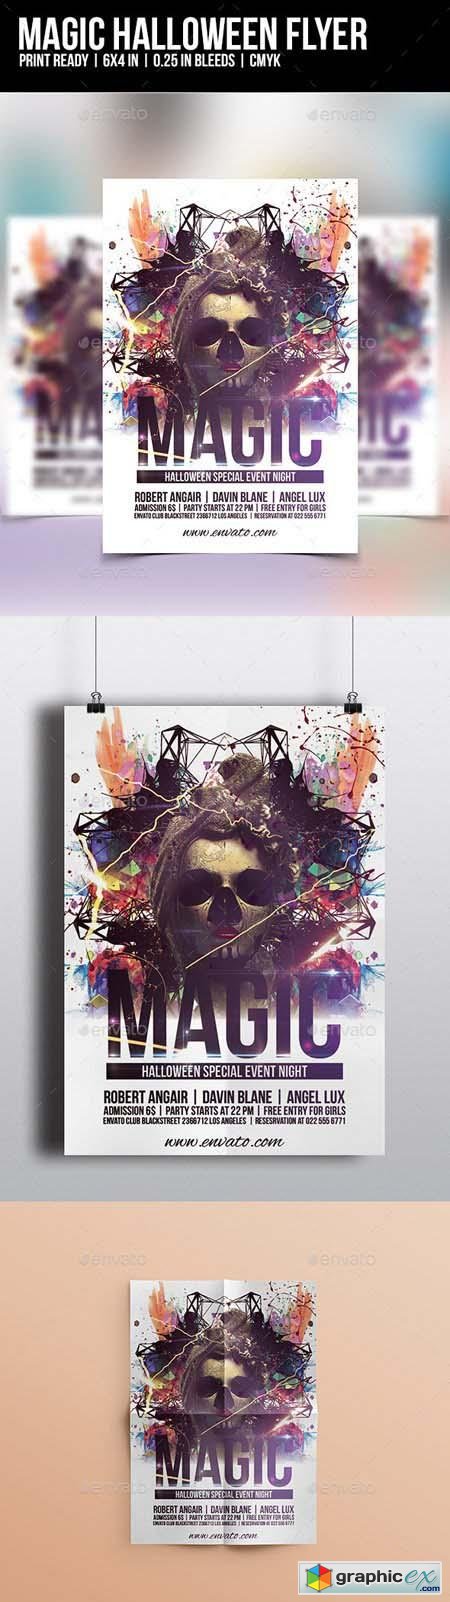 Magic Halloween Flyer Template 8952869